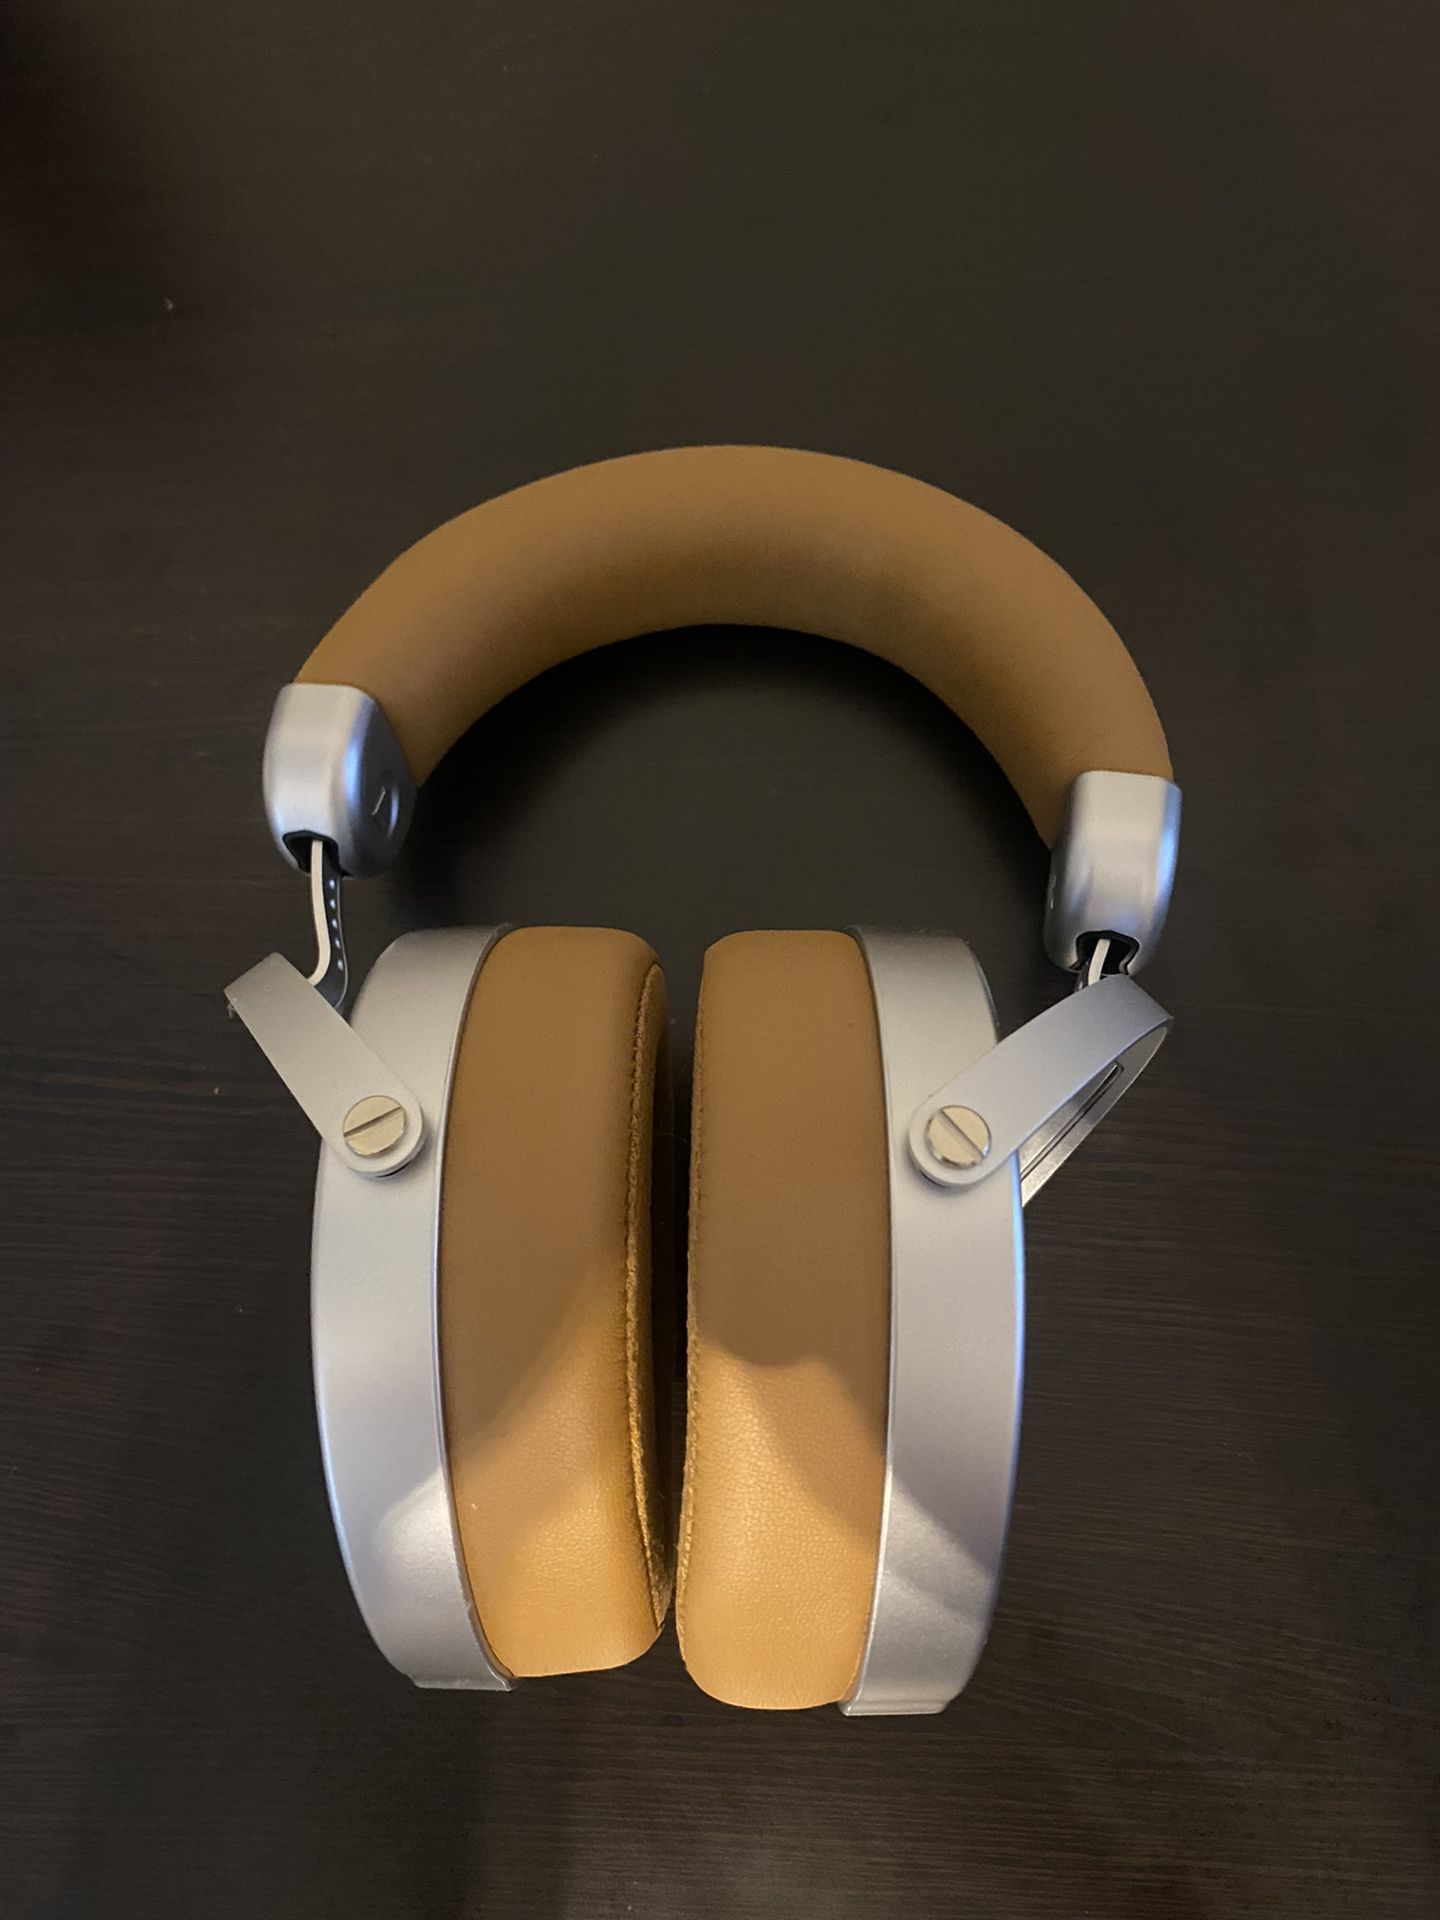 Hifiman Deva Studio Headphones With Bluetooth